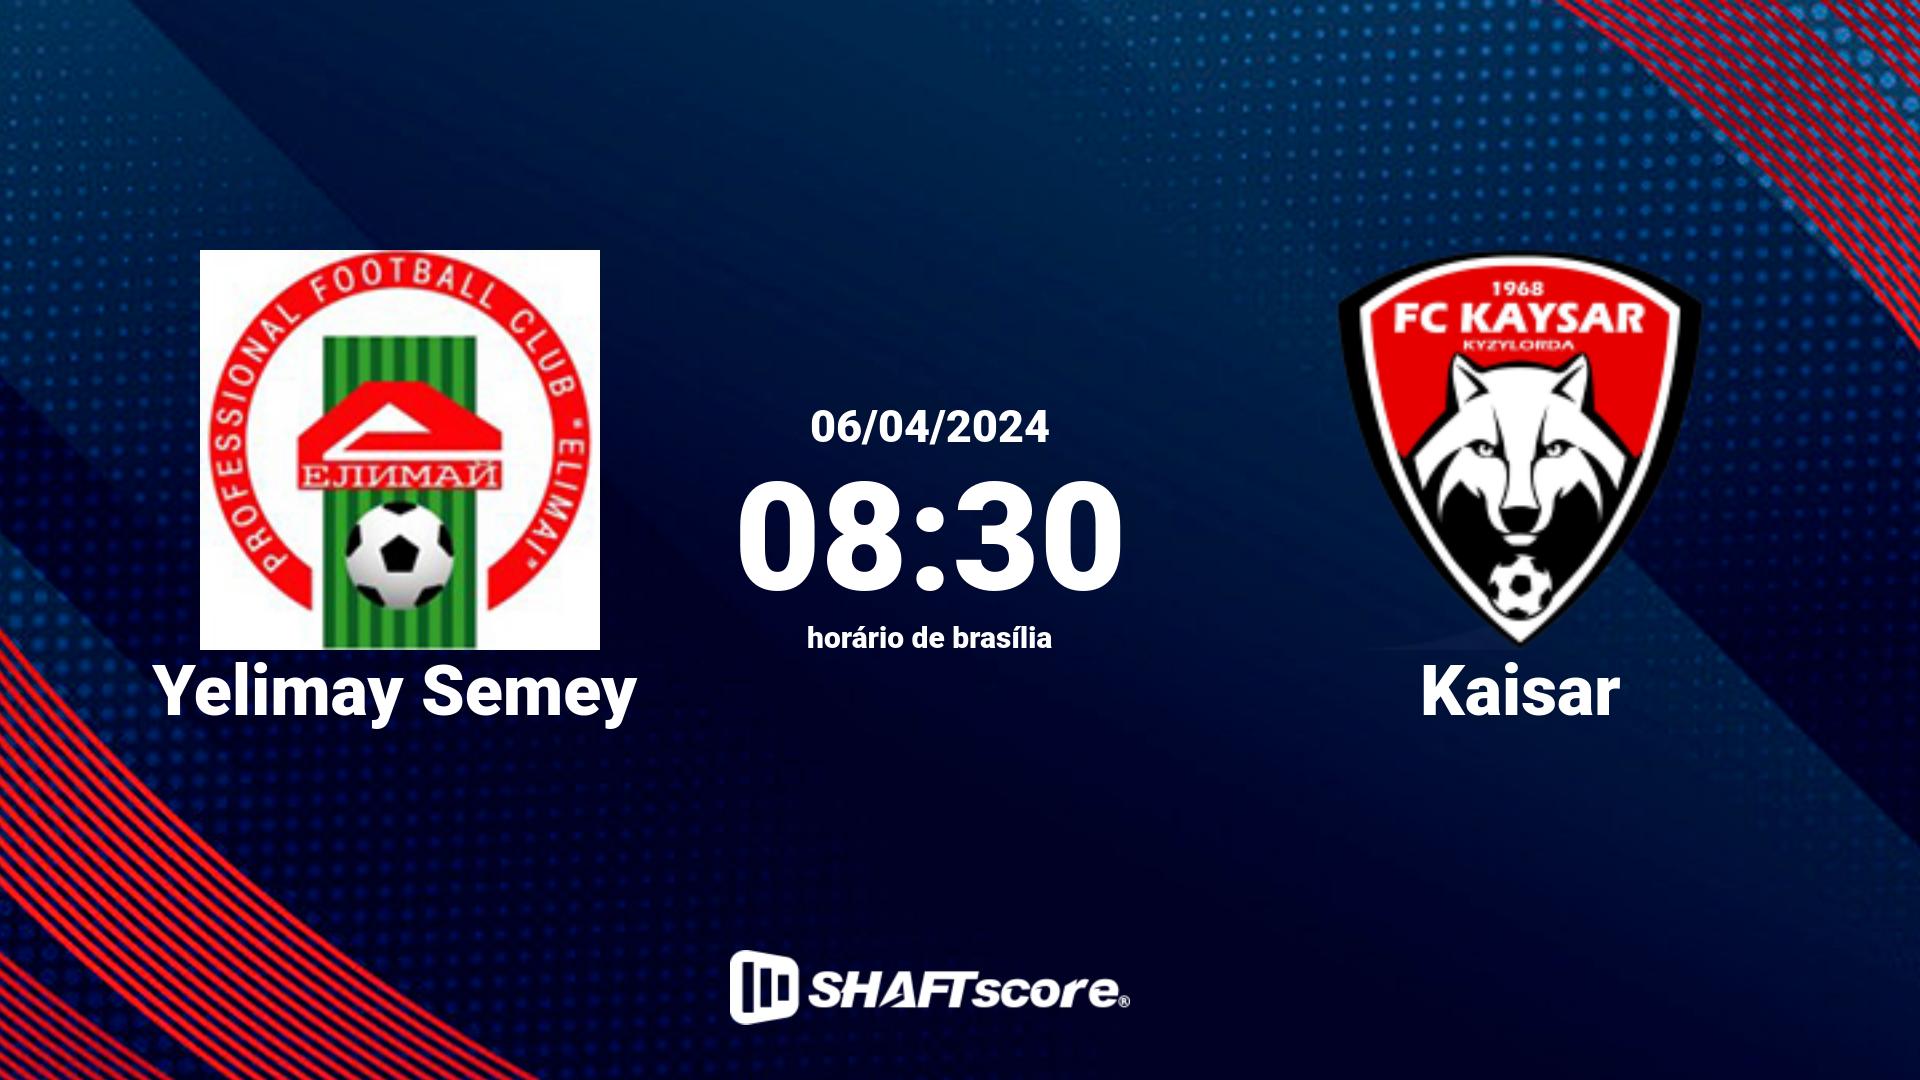 Estatísticas do jogo Yelimay Semey vs Kaisar 06.04 08:30